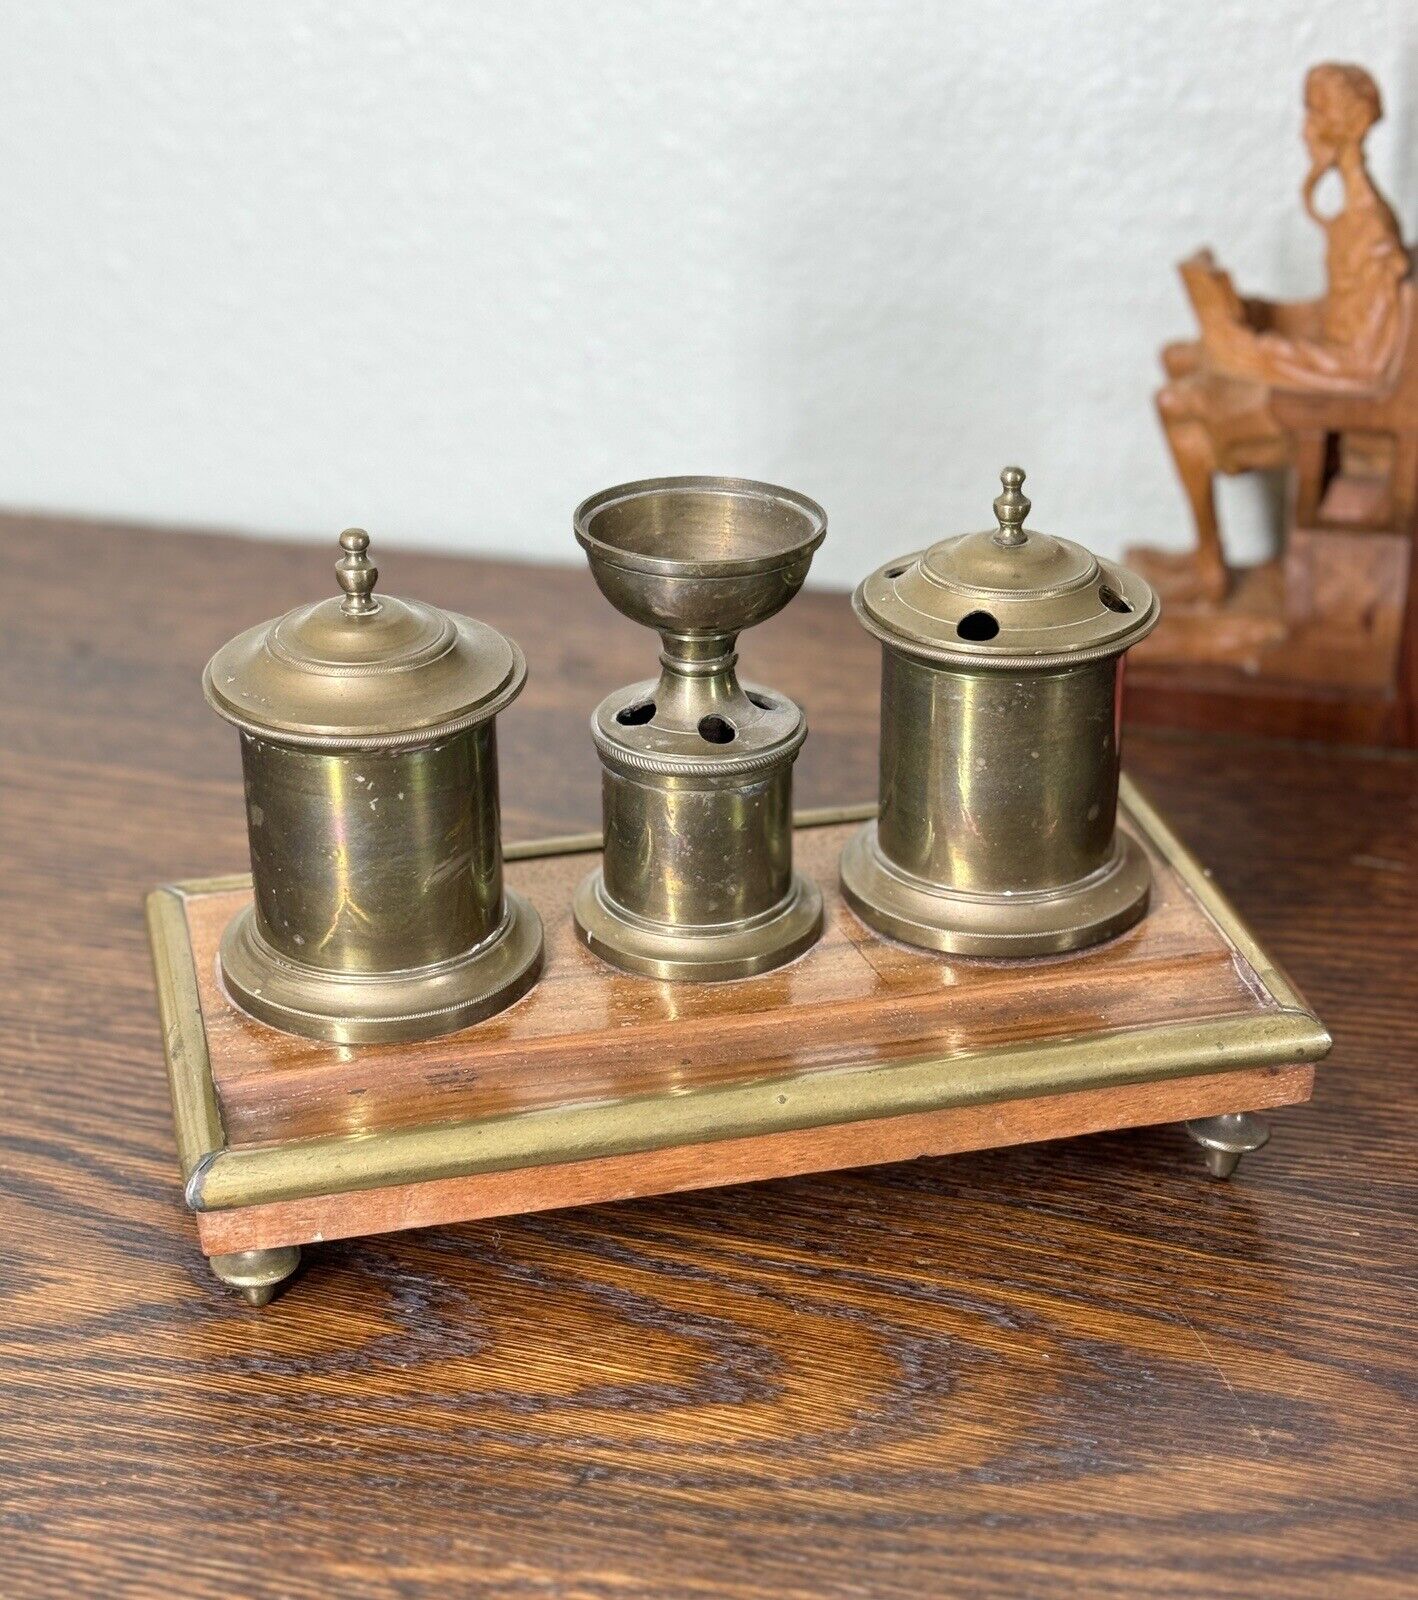 Antique English Brass Desk Set Inkwell